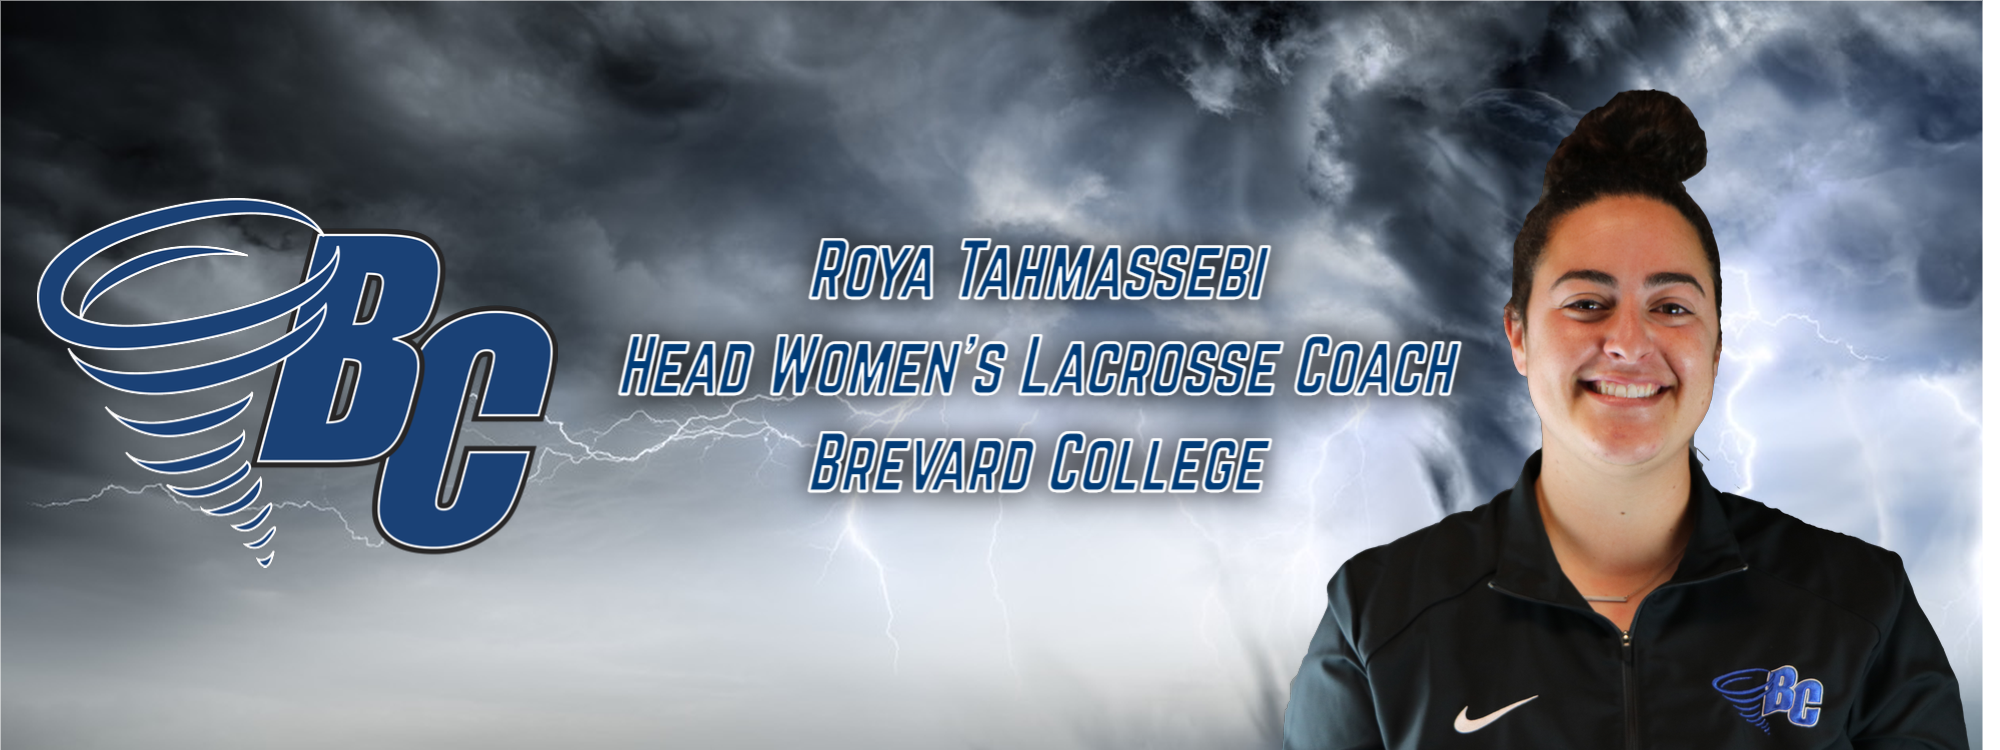 Roya Tahmassebi Named Brevard College Head Women’s Lacrosse Coach